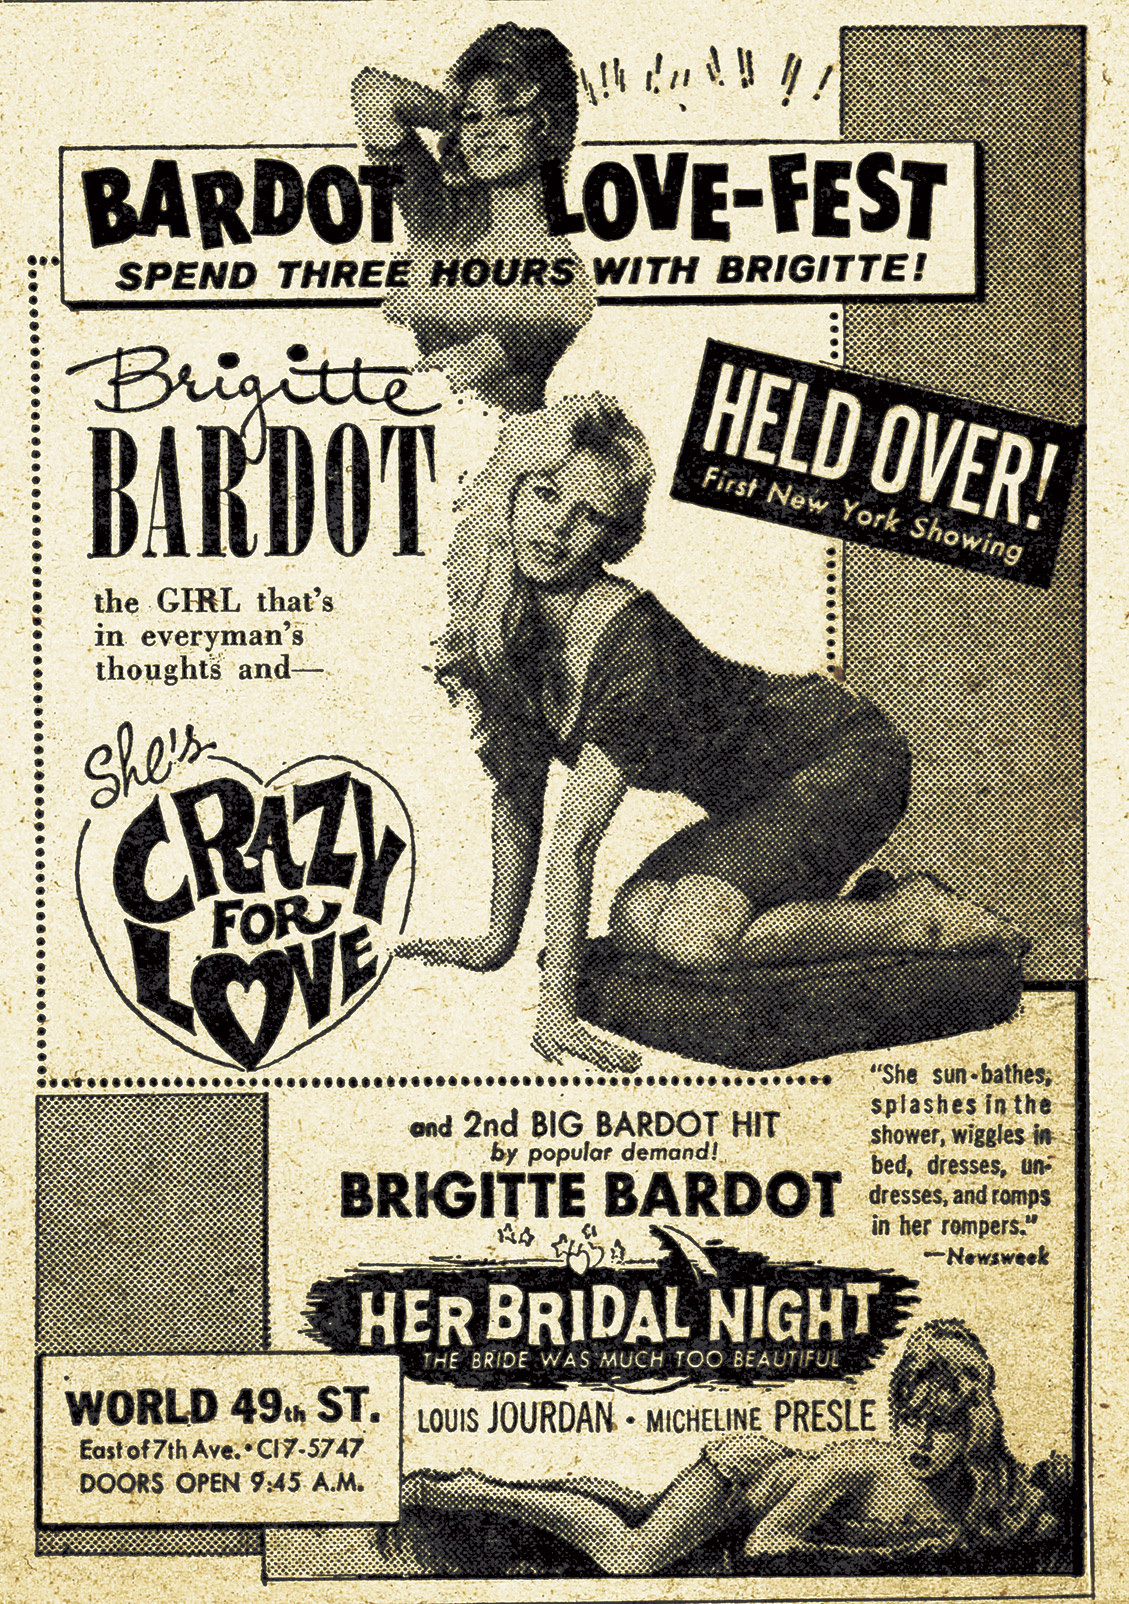 Bardot Love Fest newspaper advertisement, 1958.